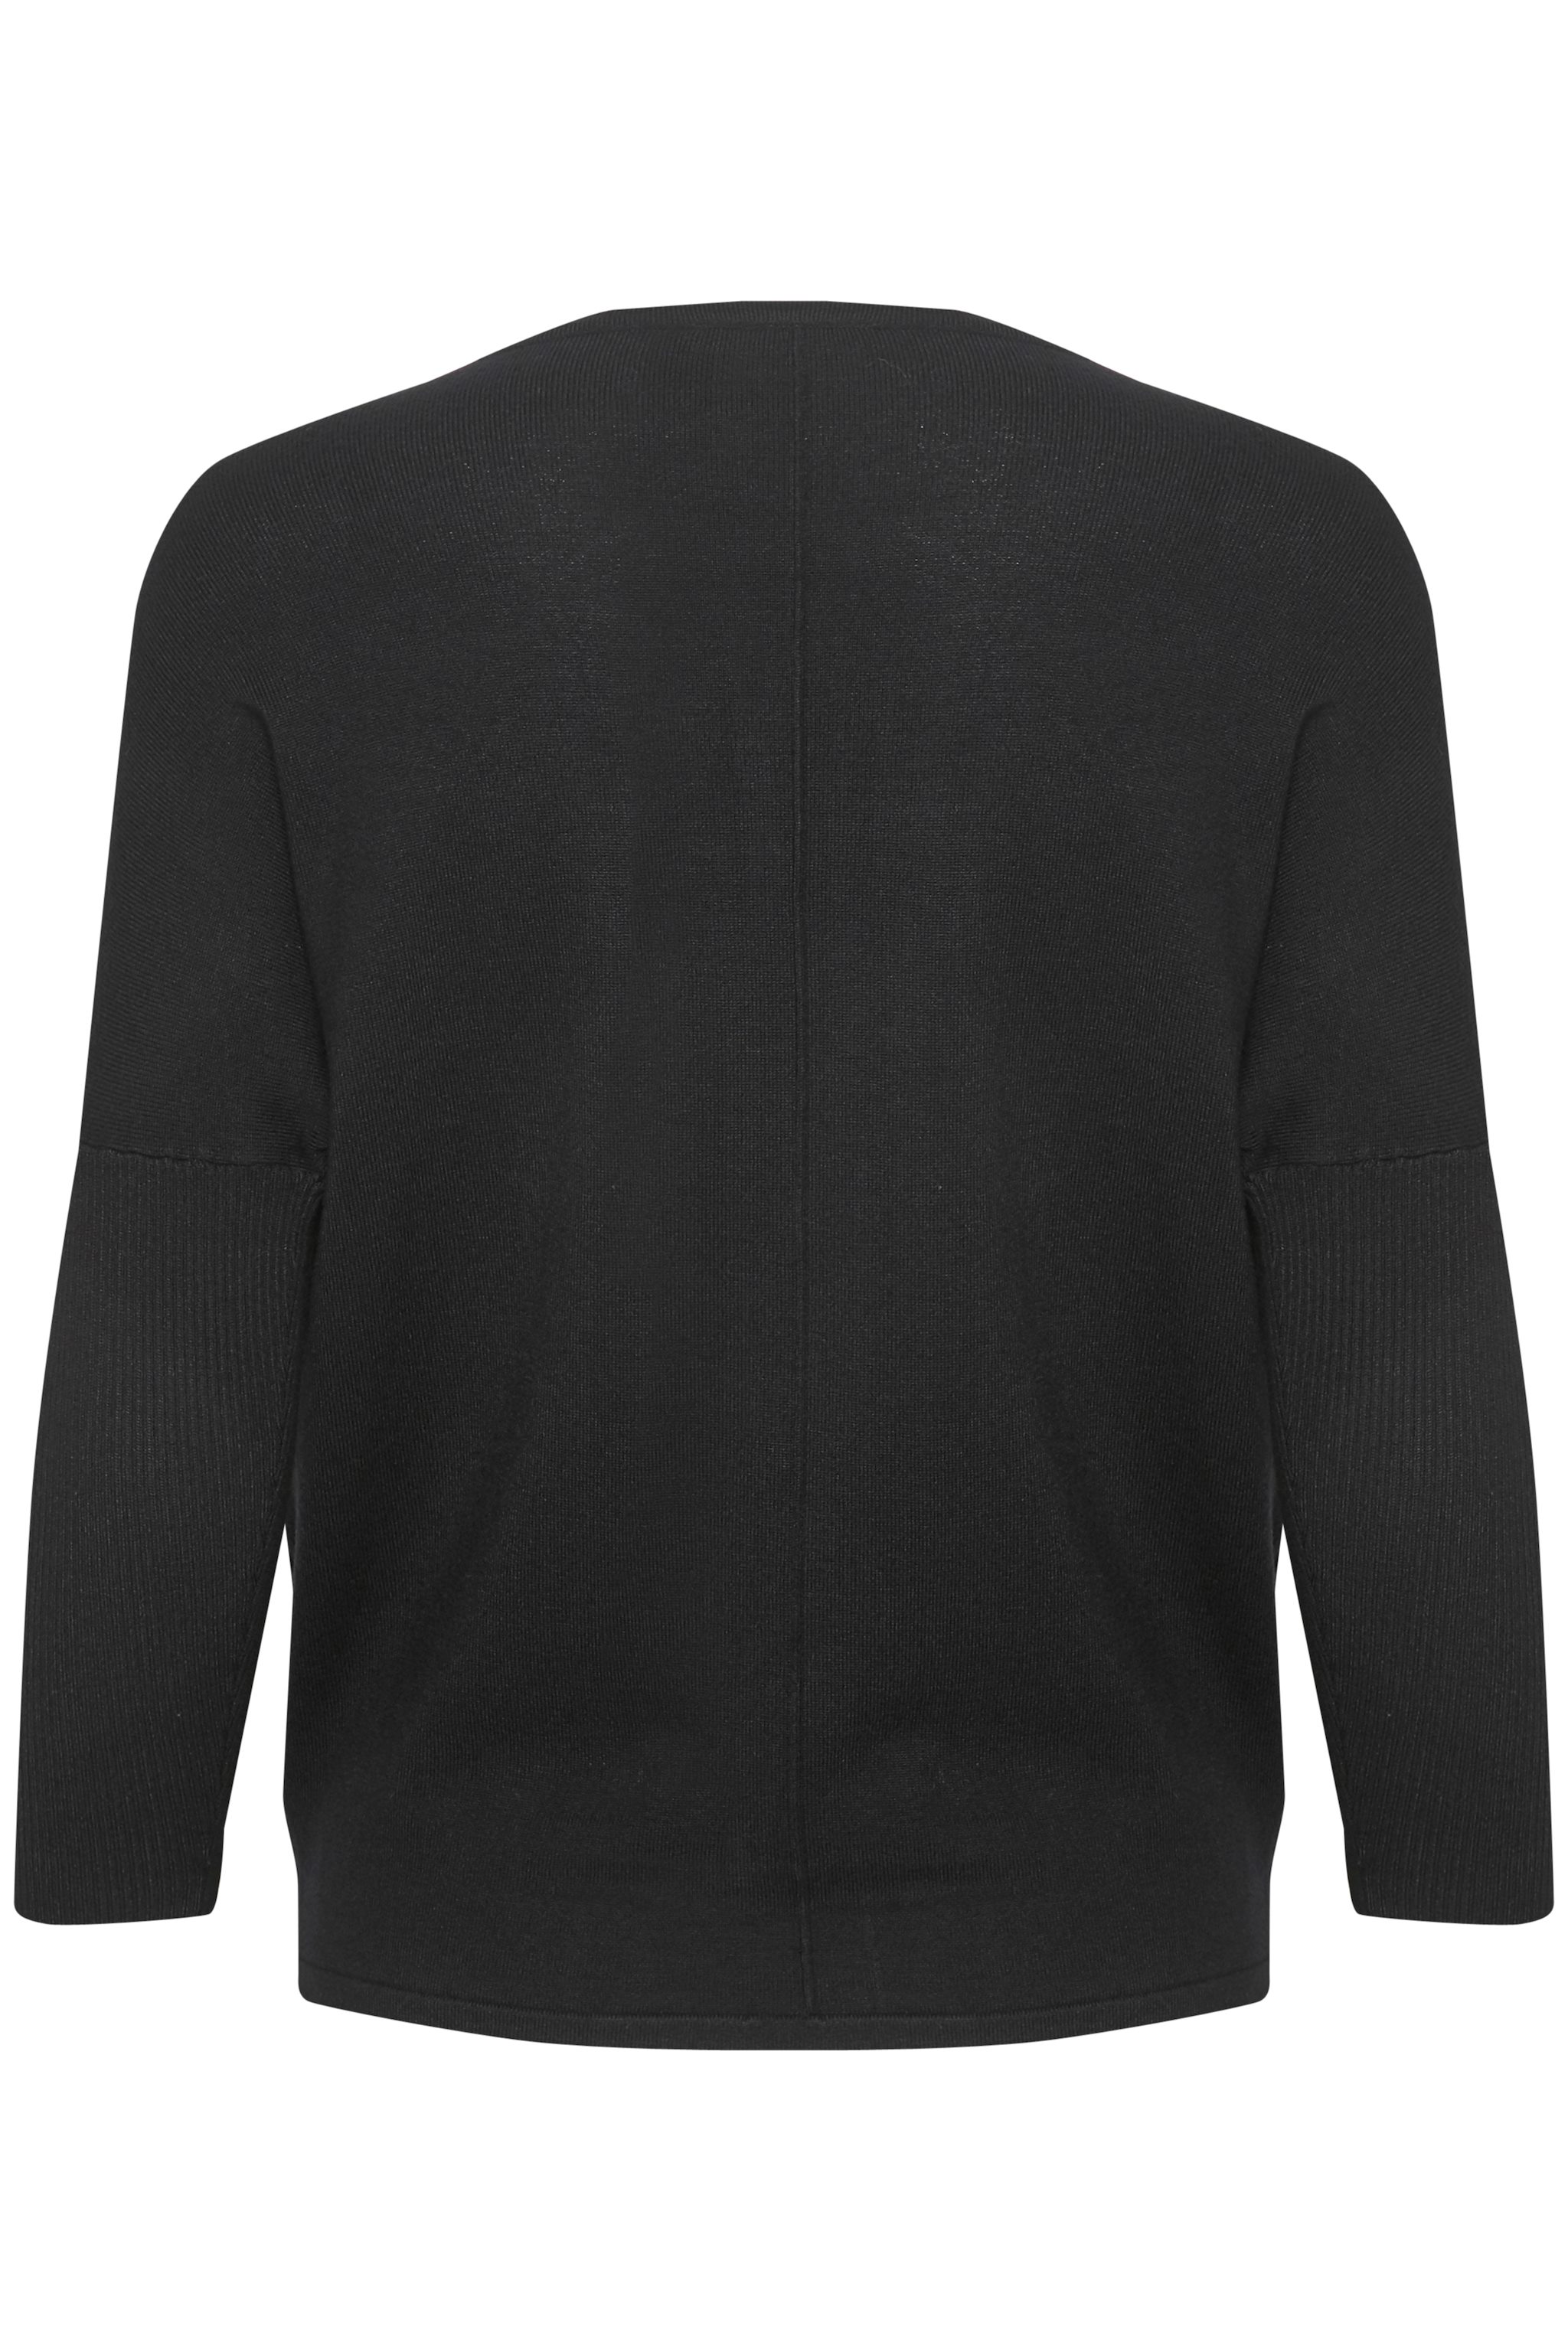 Mila R-Neck pullover black